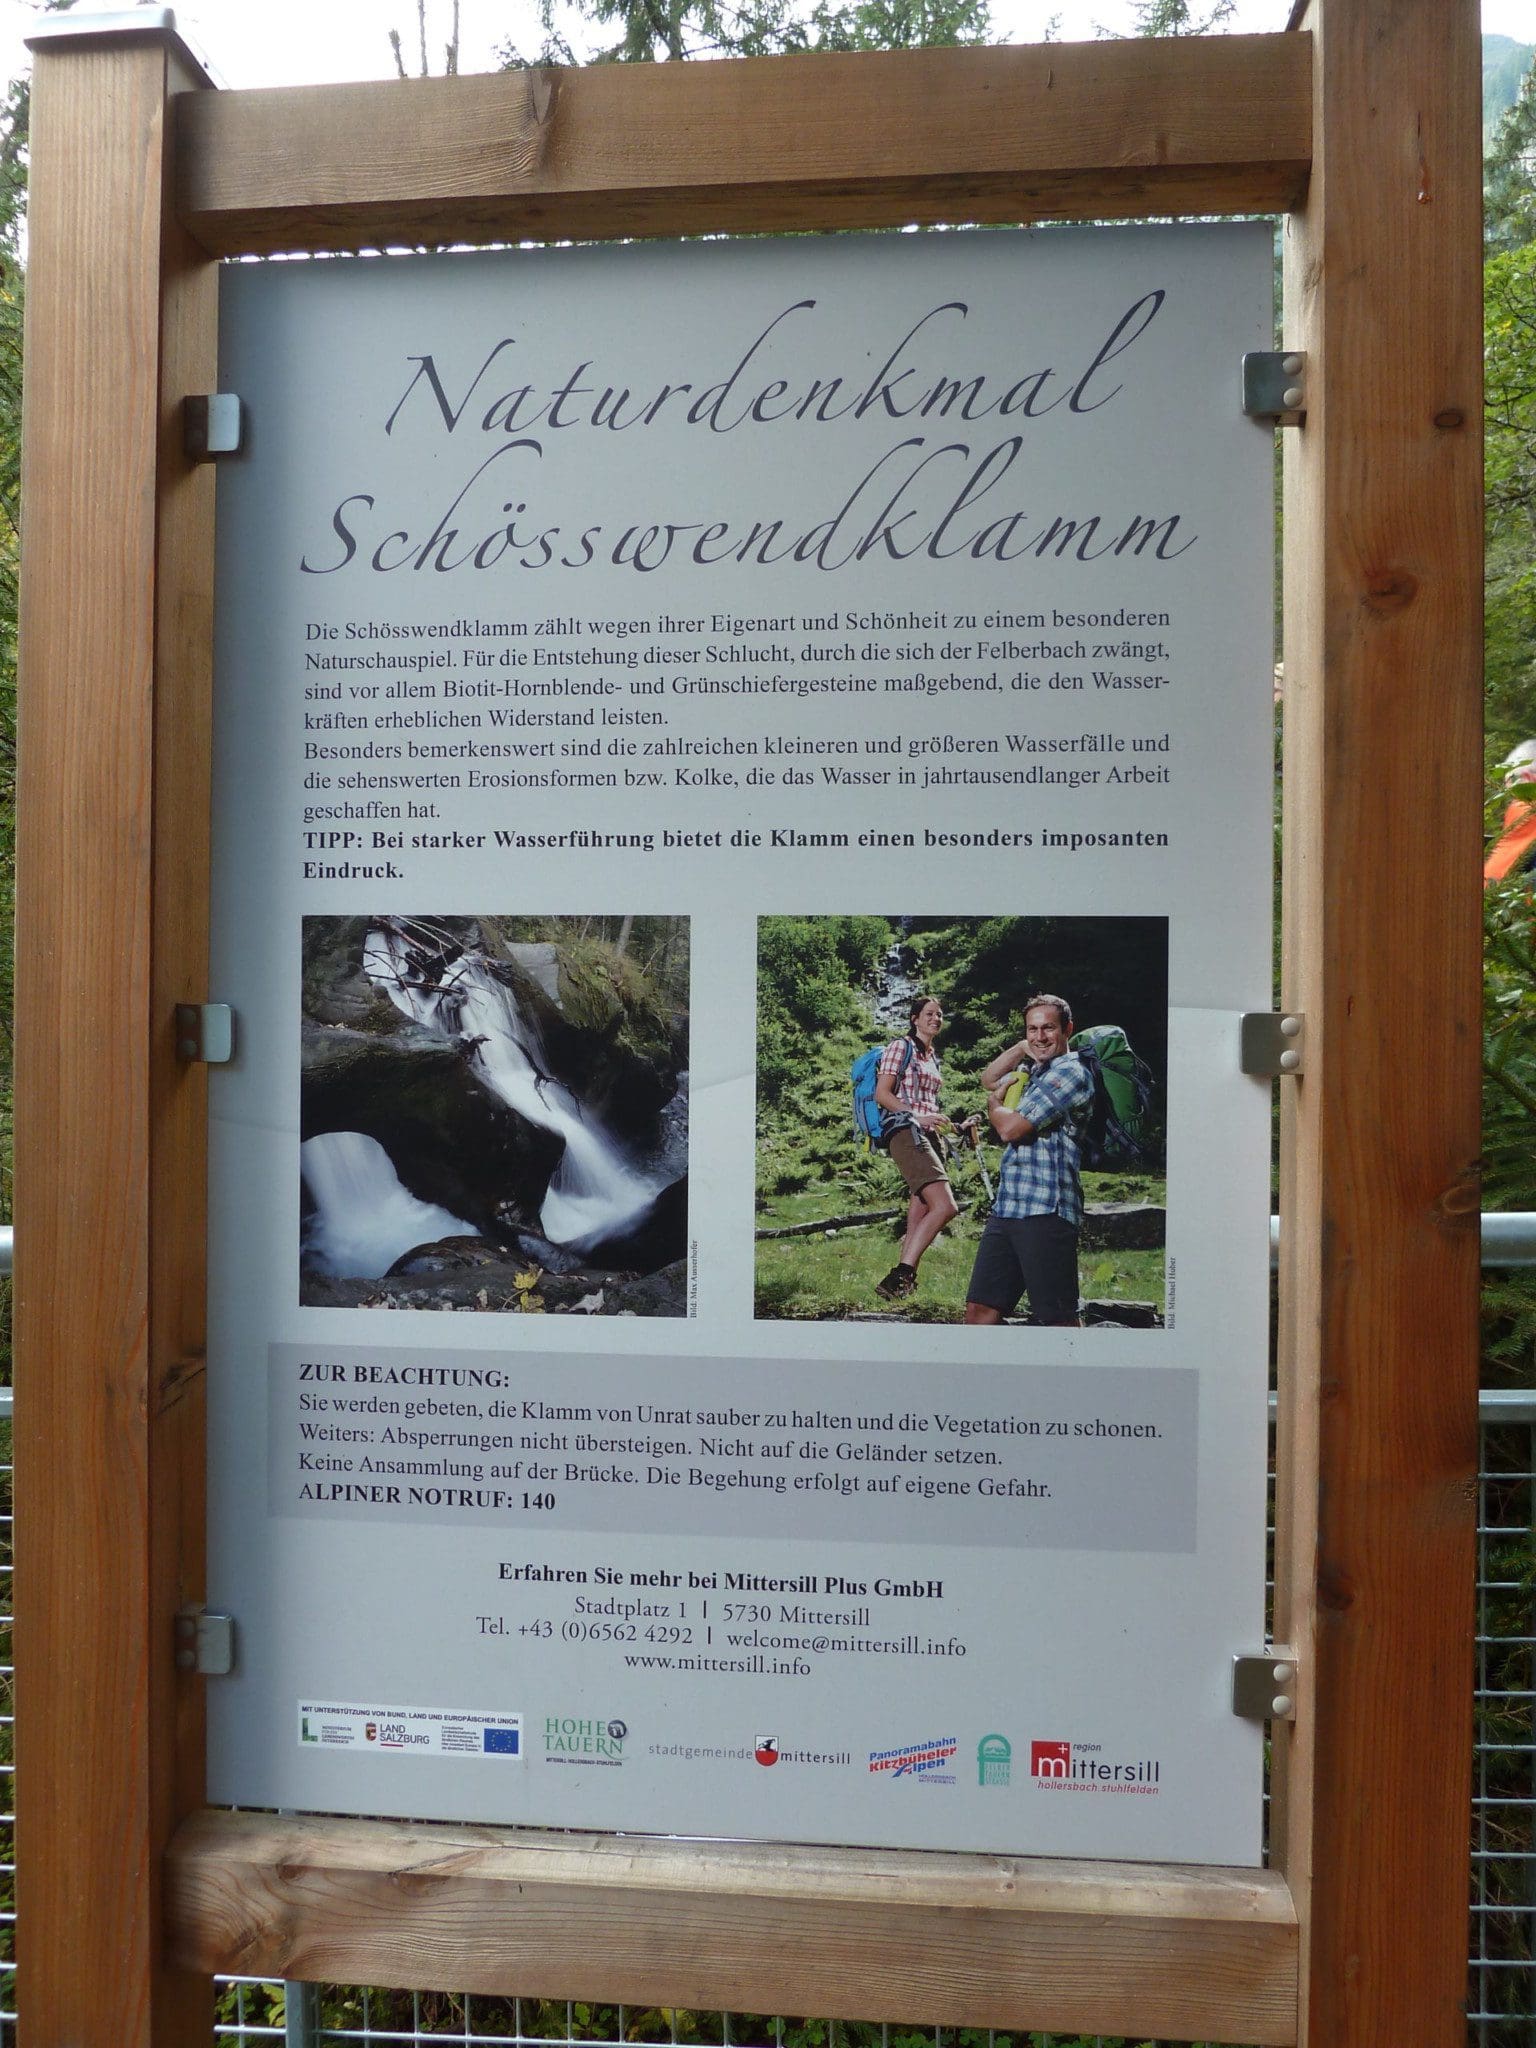 Naturdenkmal Schösswendklamm - Schautafel